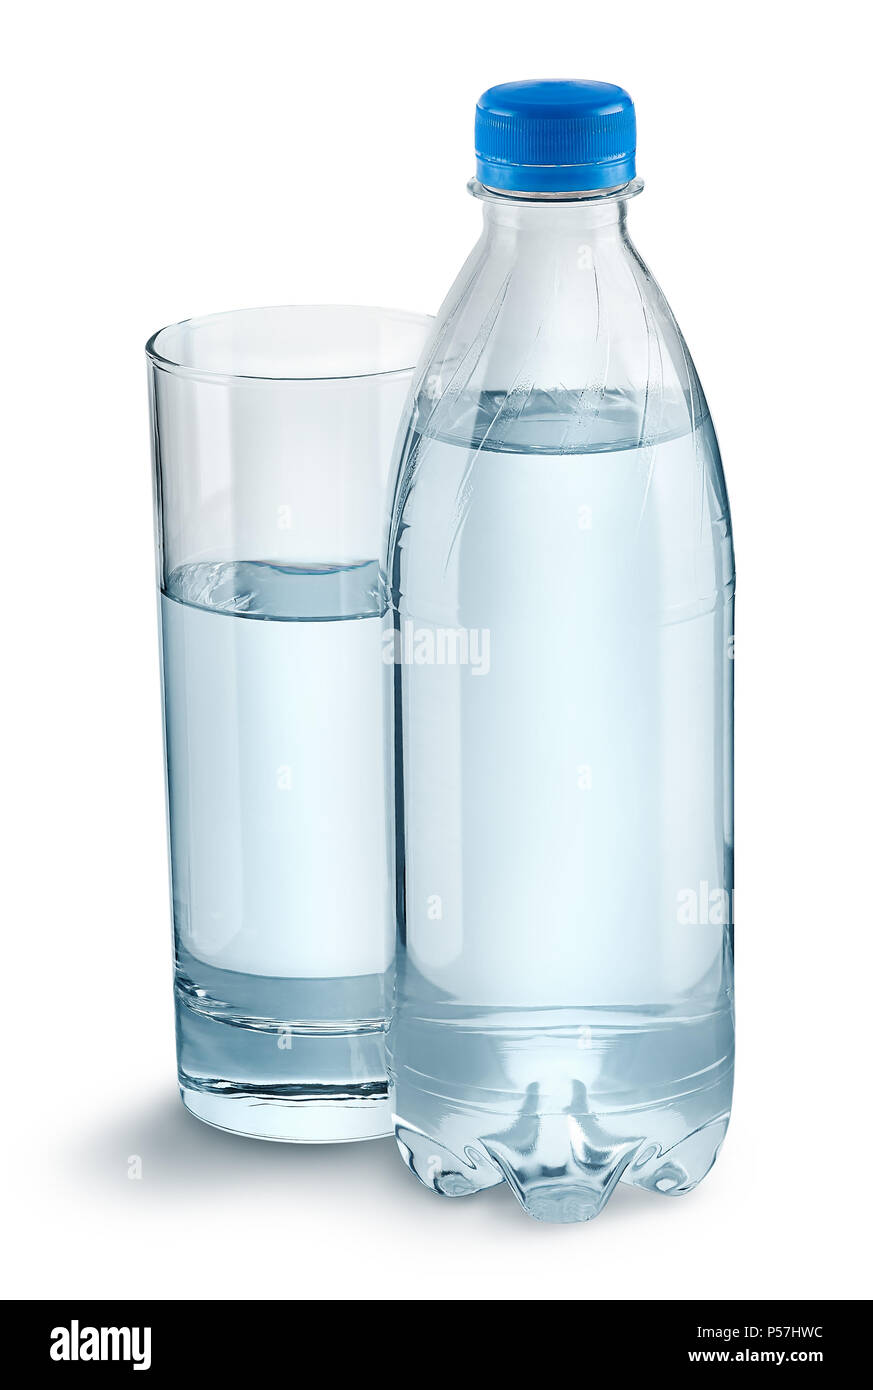 File:Botella agua.JPG - Wikimedia Commons